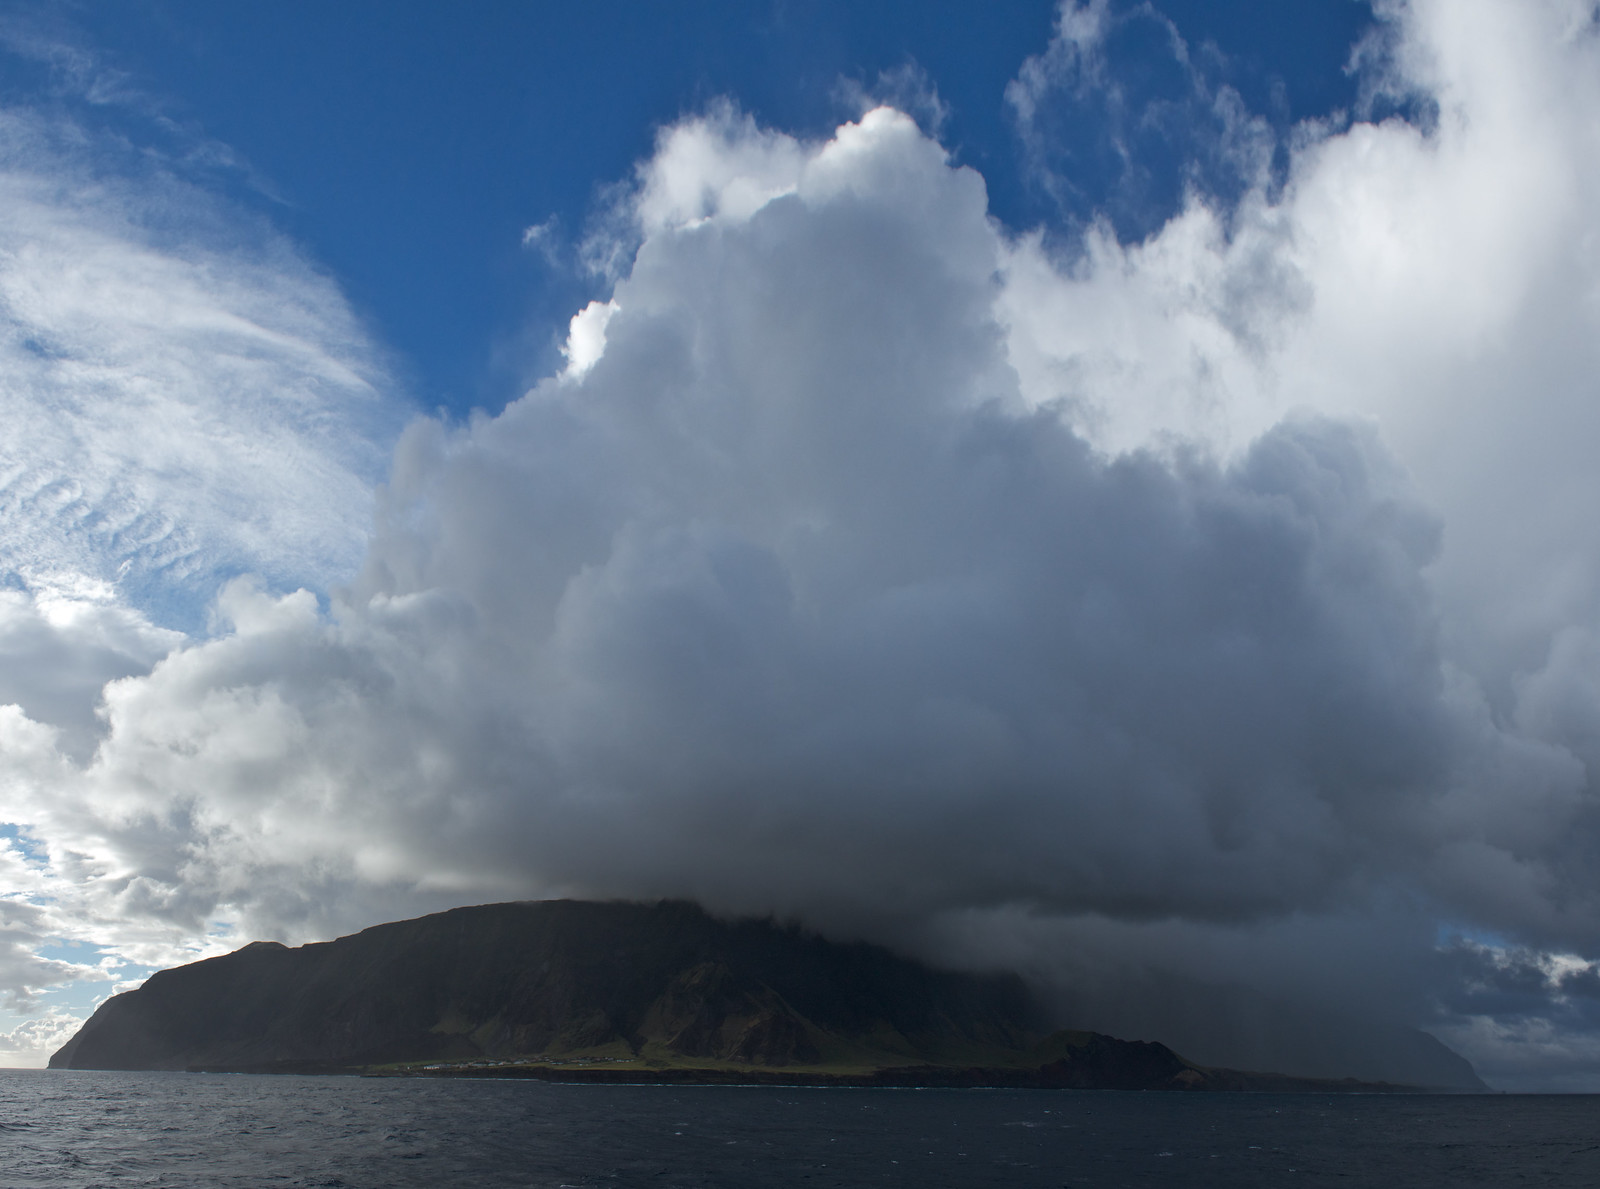 Storm clouds gather over Tristan da Cunha